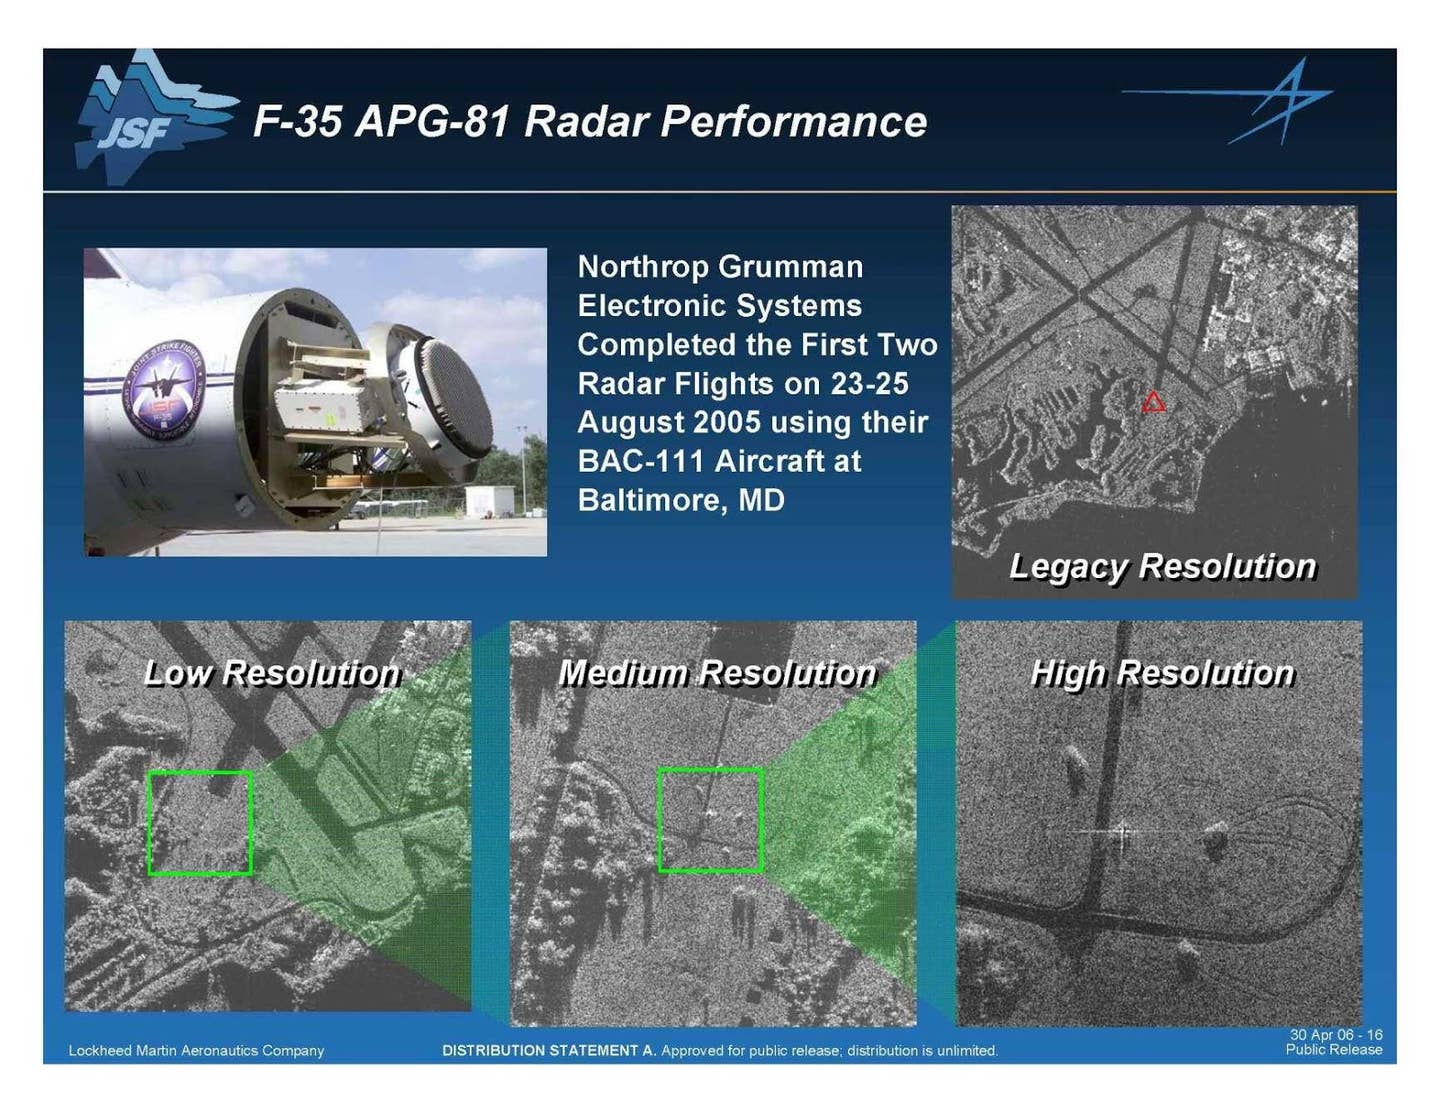 F-35의 현재 레이다인 AN/APG-81의 성능을 설명하고 있는 장표 - 1